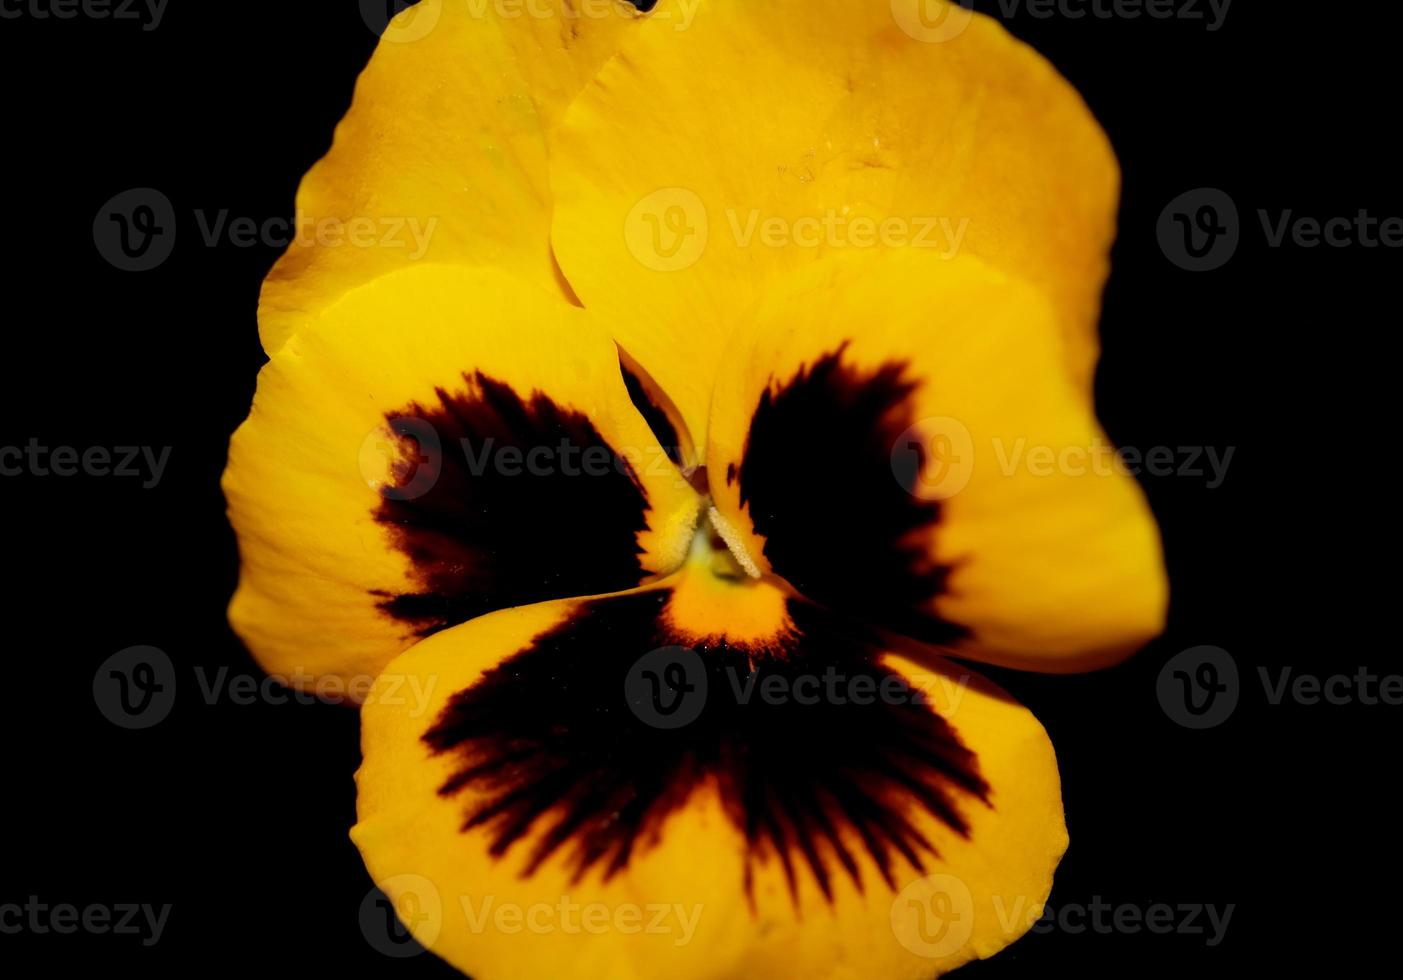 viola blomma blomma familjen violaceae närbild botaniskt tryck foto